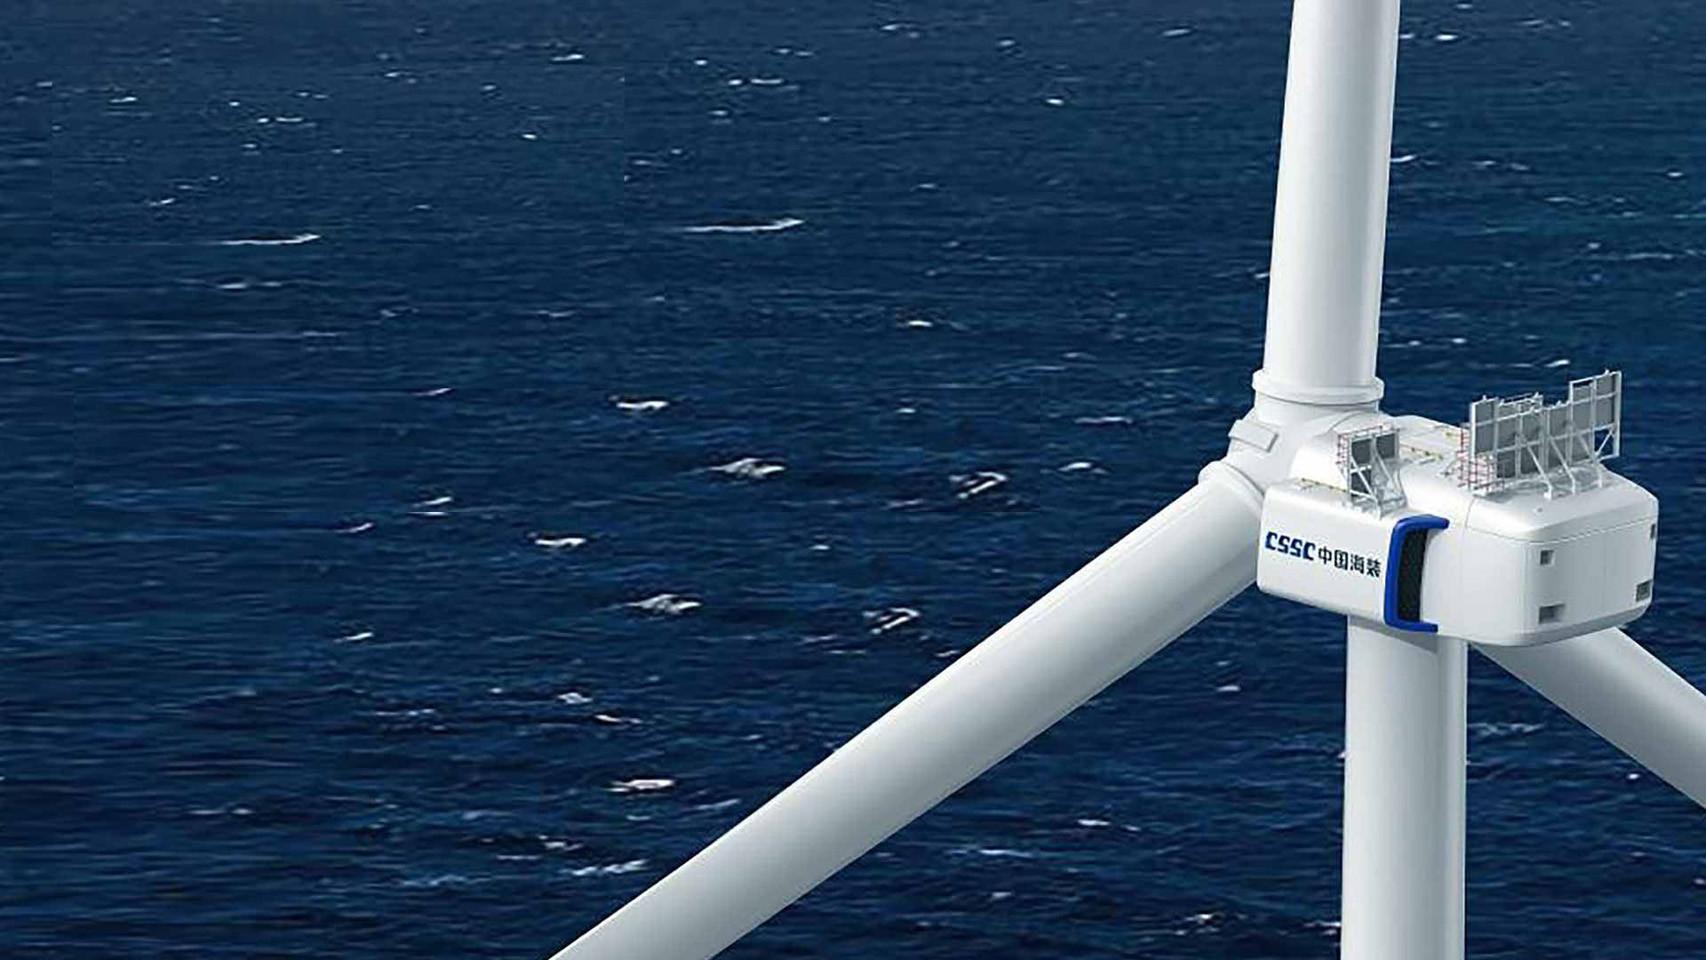 La china Mingyang prepara una turbina eólica de 22 MW, tan alta como la  Torre Eiffel - El Periódico de la Energía